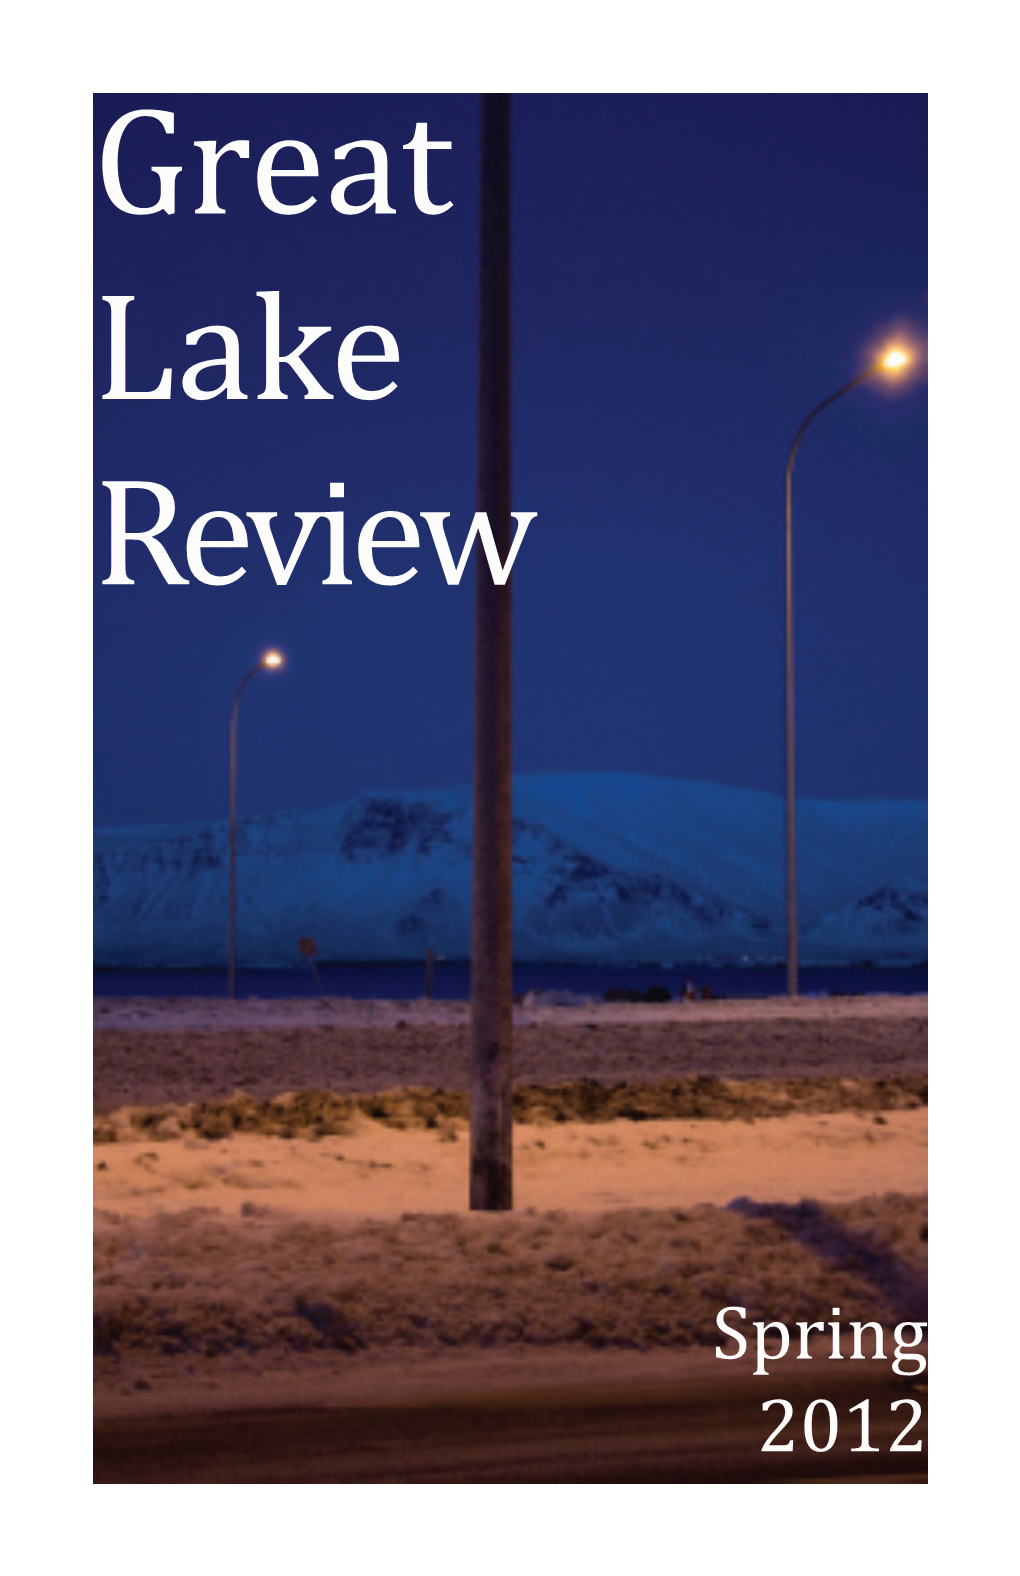 Great Lake Review